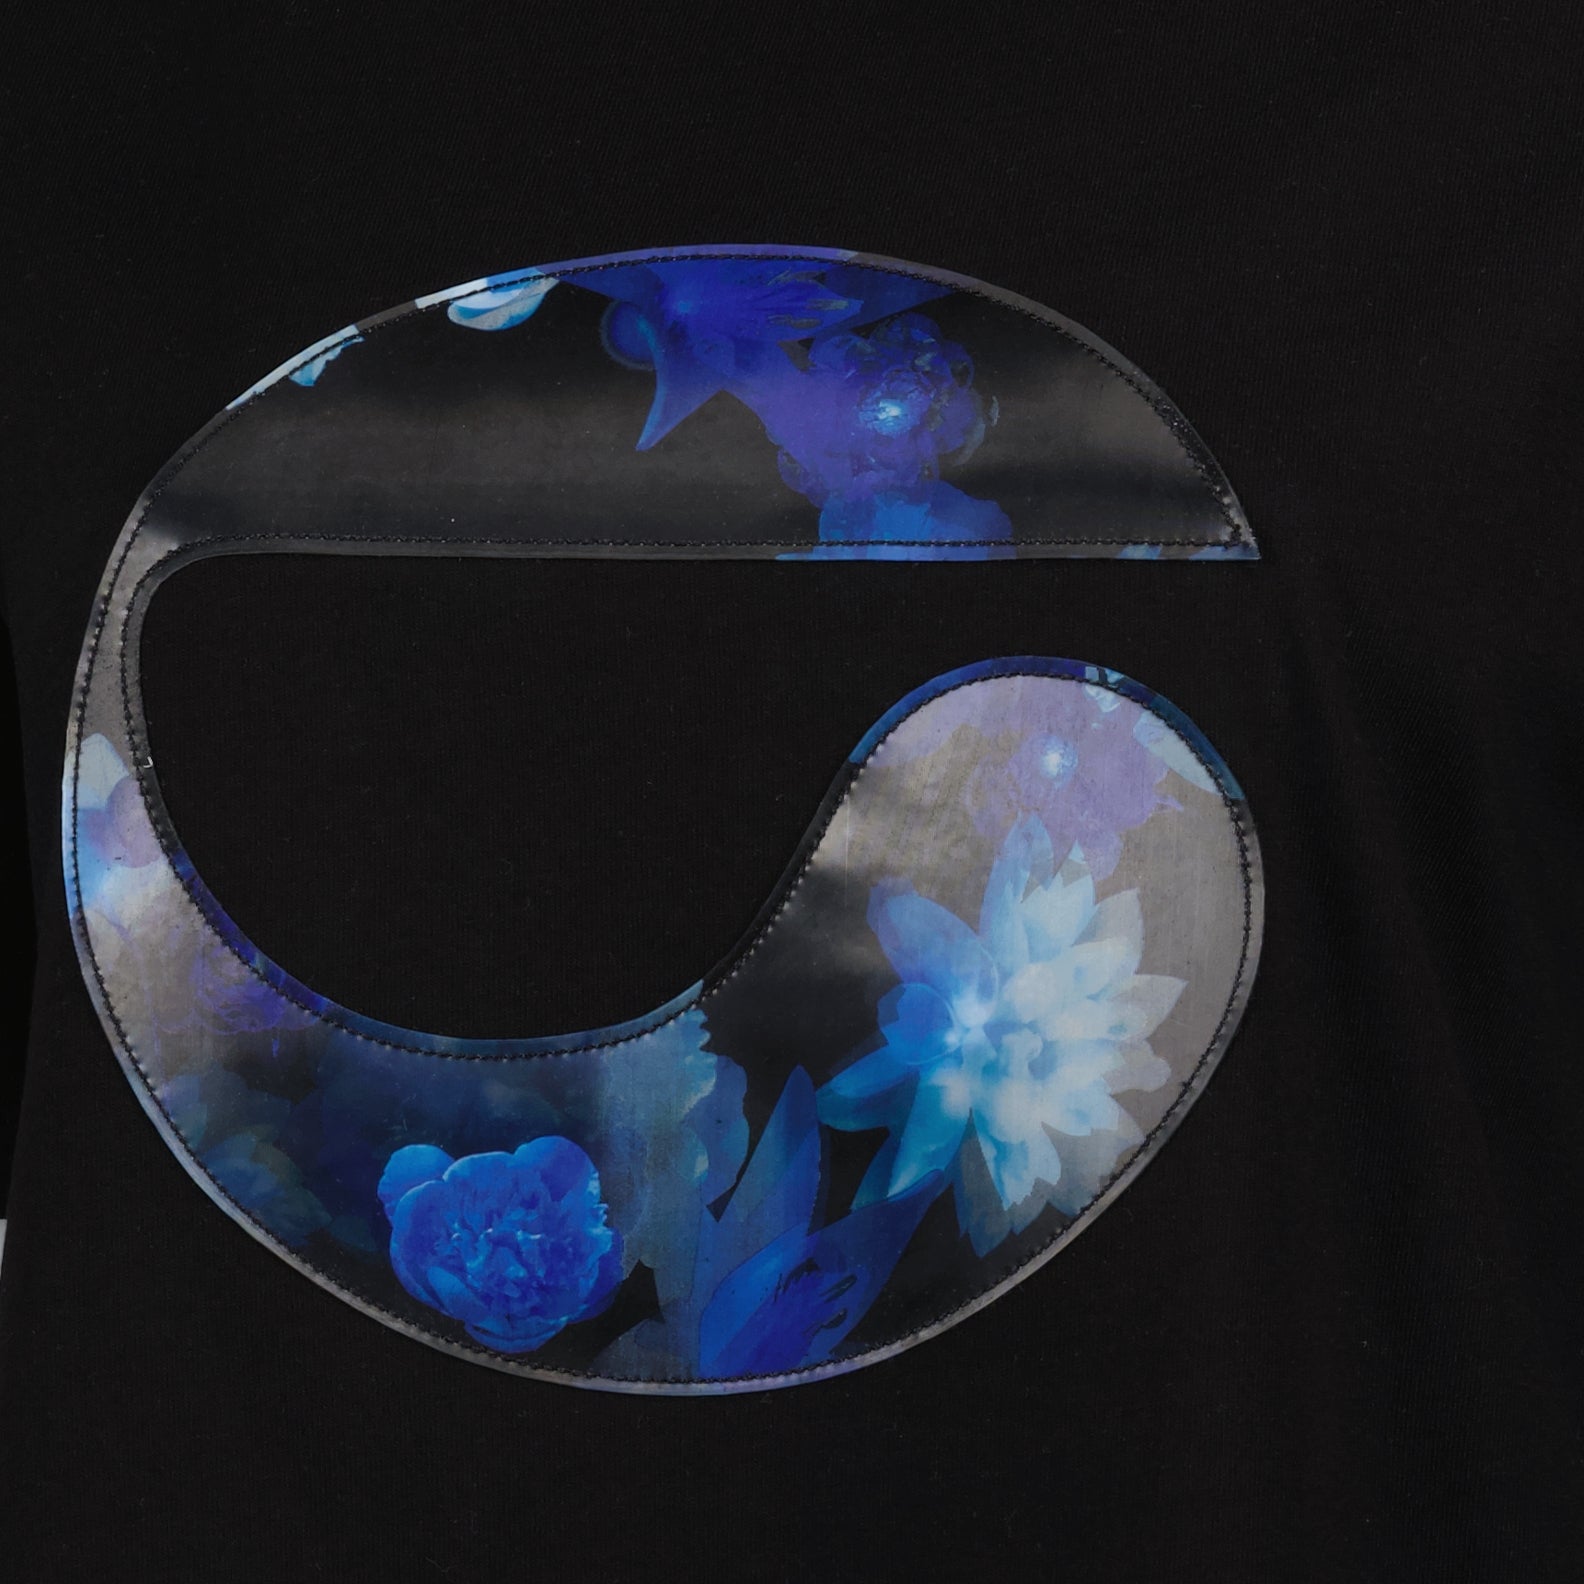 T-shirt holographique Boxy